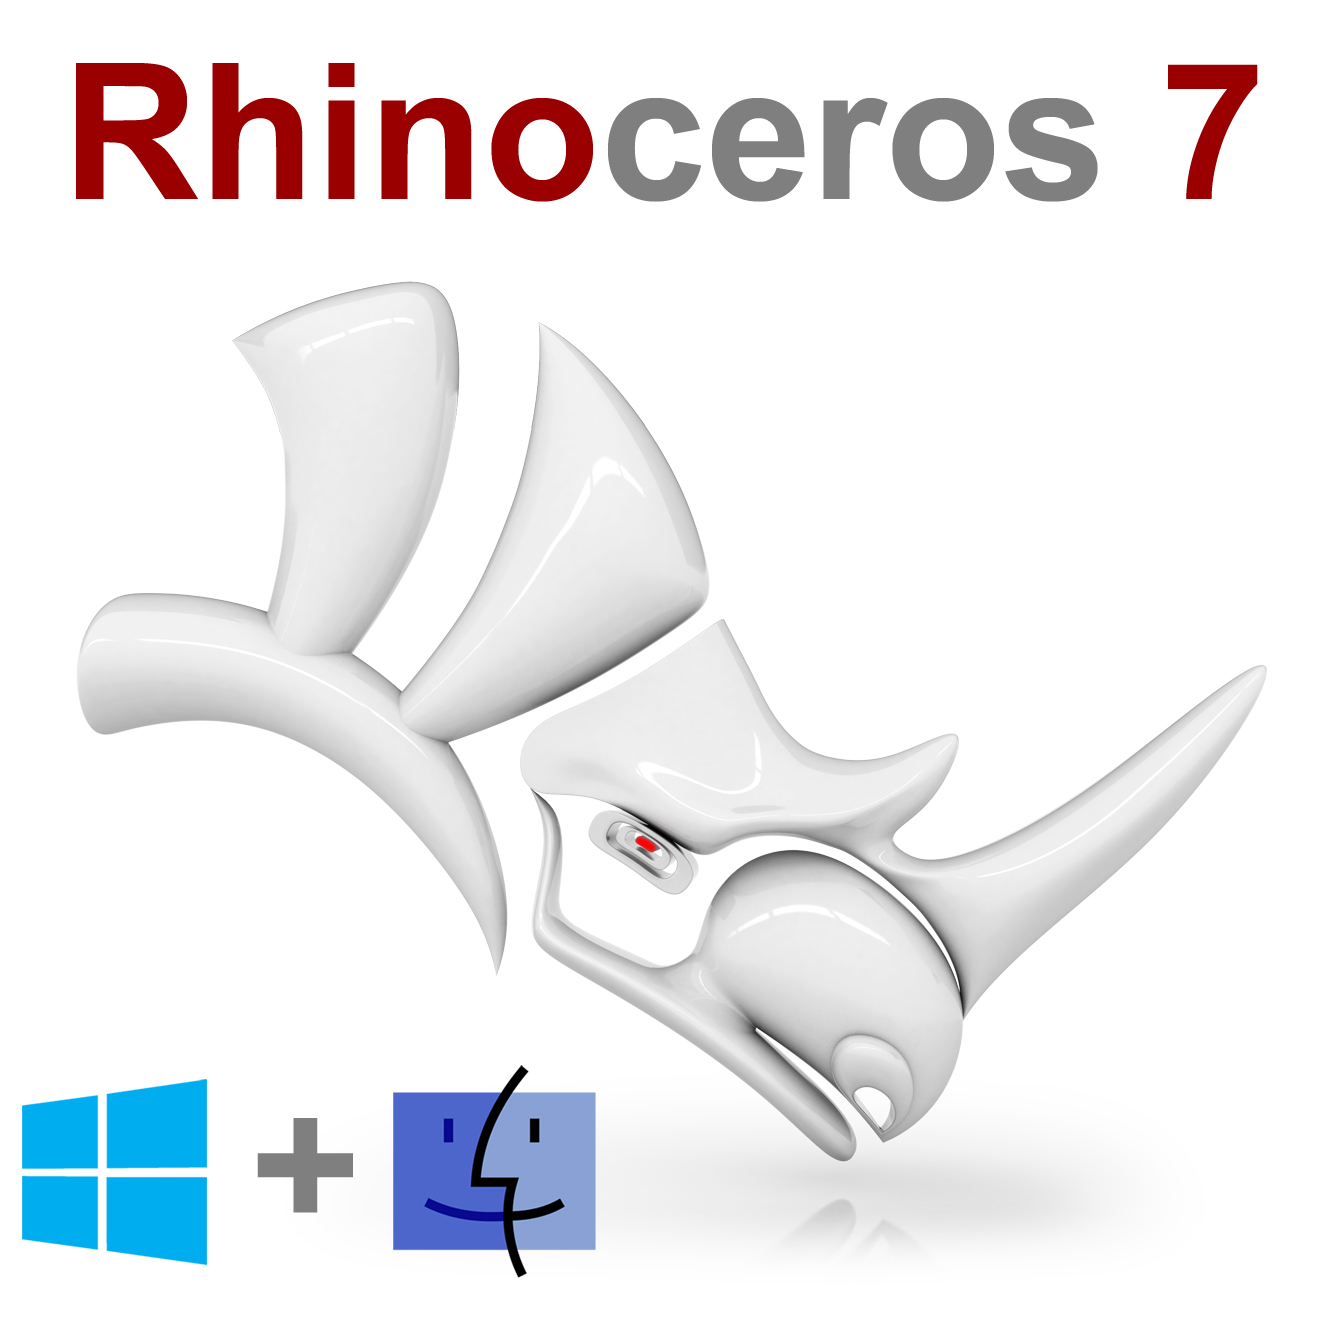 Rhinoceros 7.1 Crack Full License Key Generator 2021 Free Download